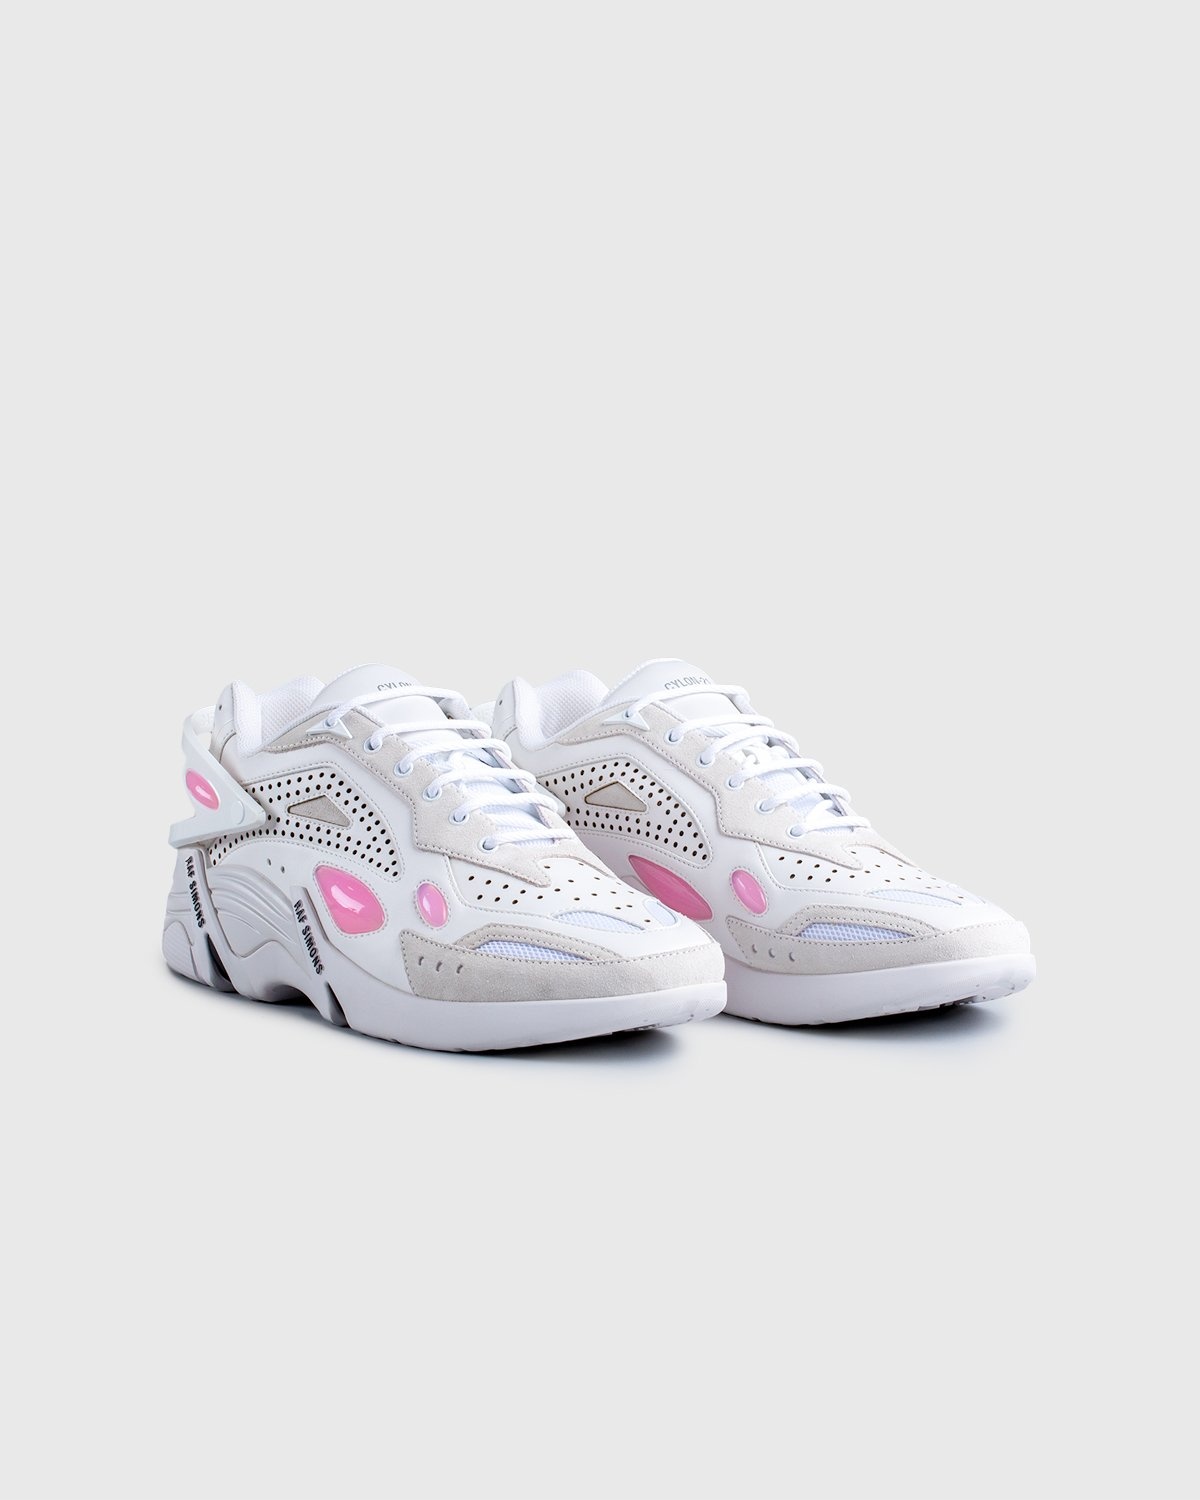 Raf Simons – Cylon White - Low Top Sneakers - White - Image 3